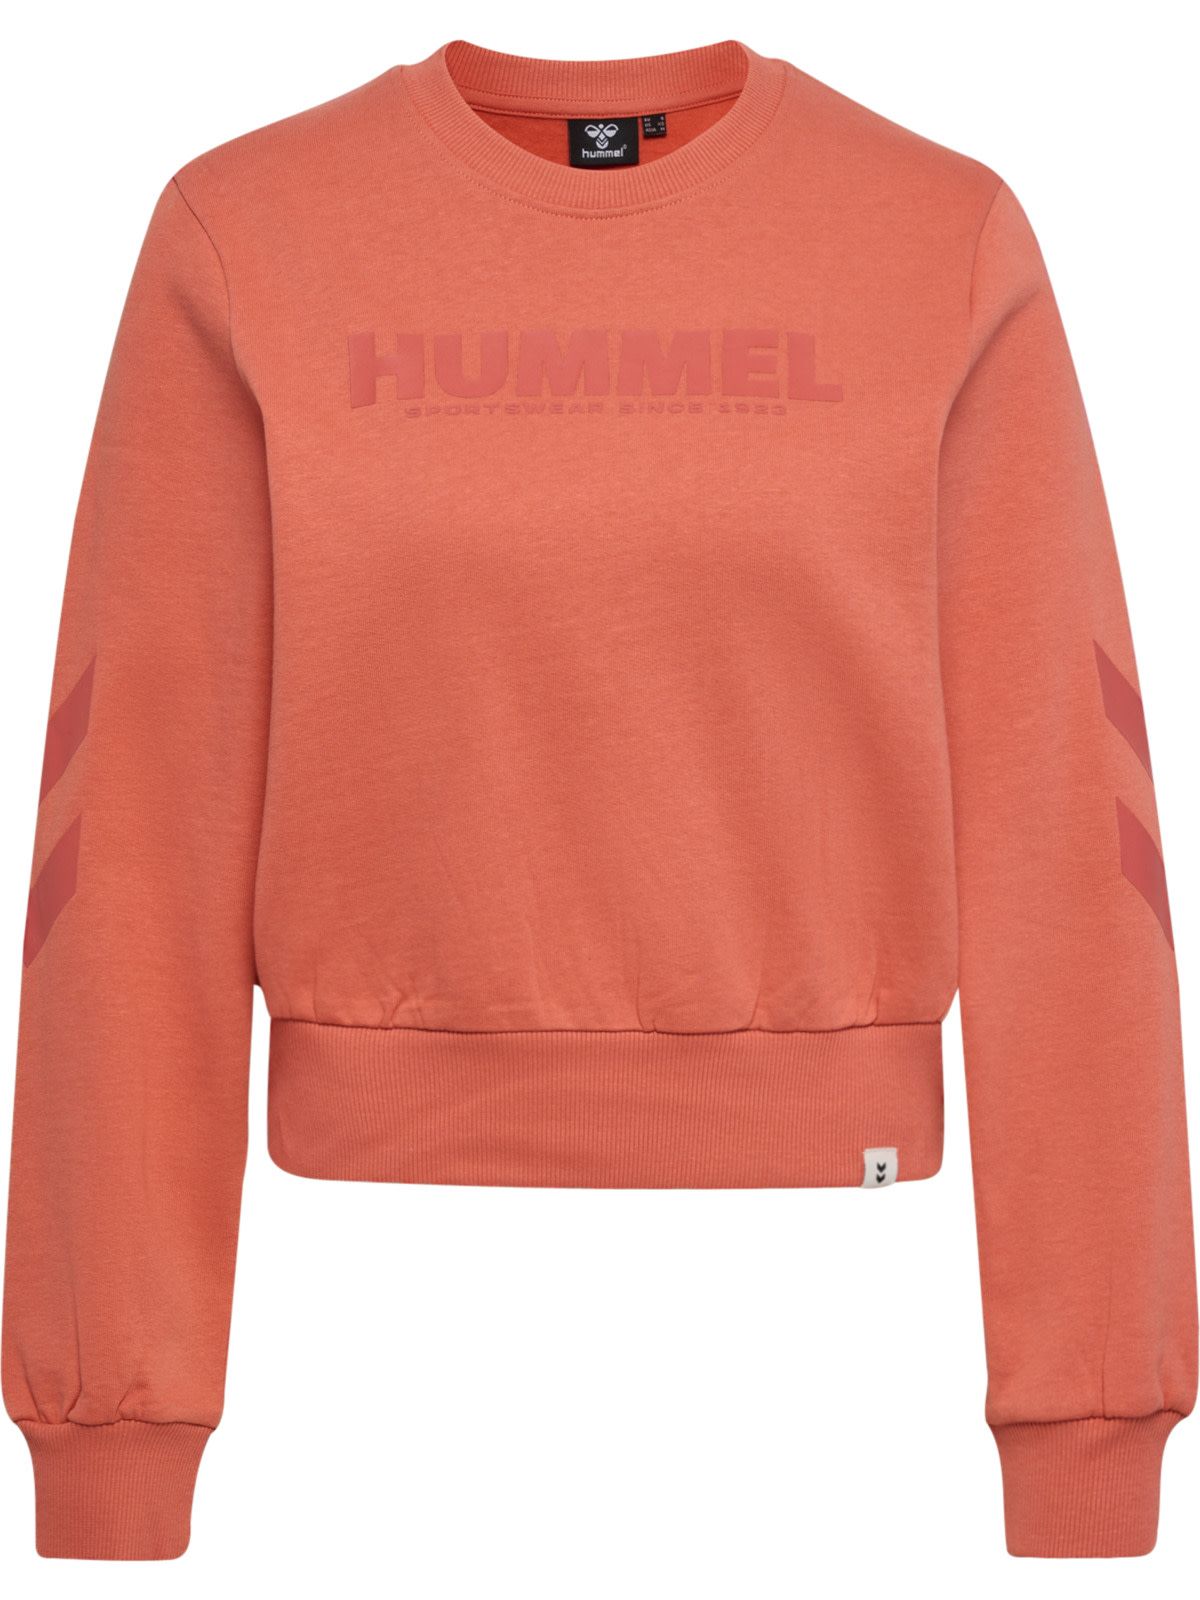 Hummel Women's hmlLEGACY Sweatshirt Apricot Brandy